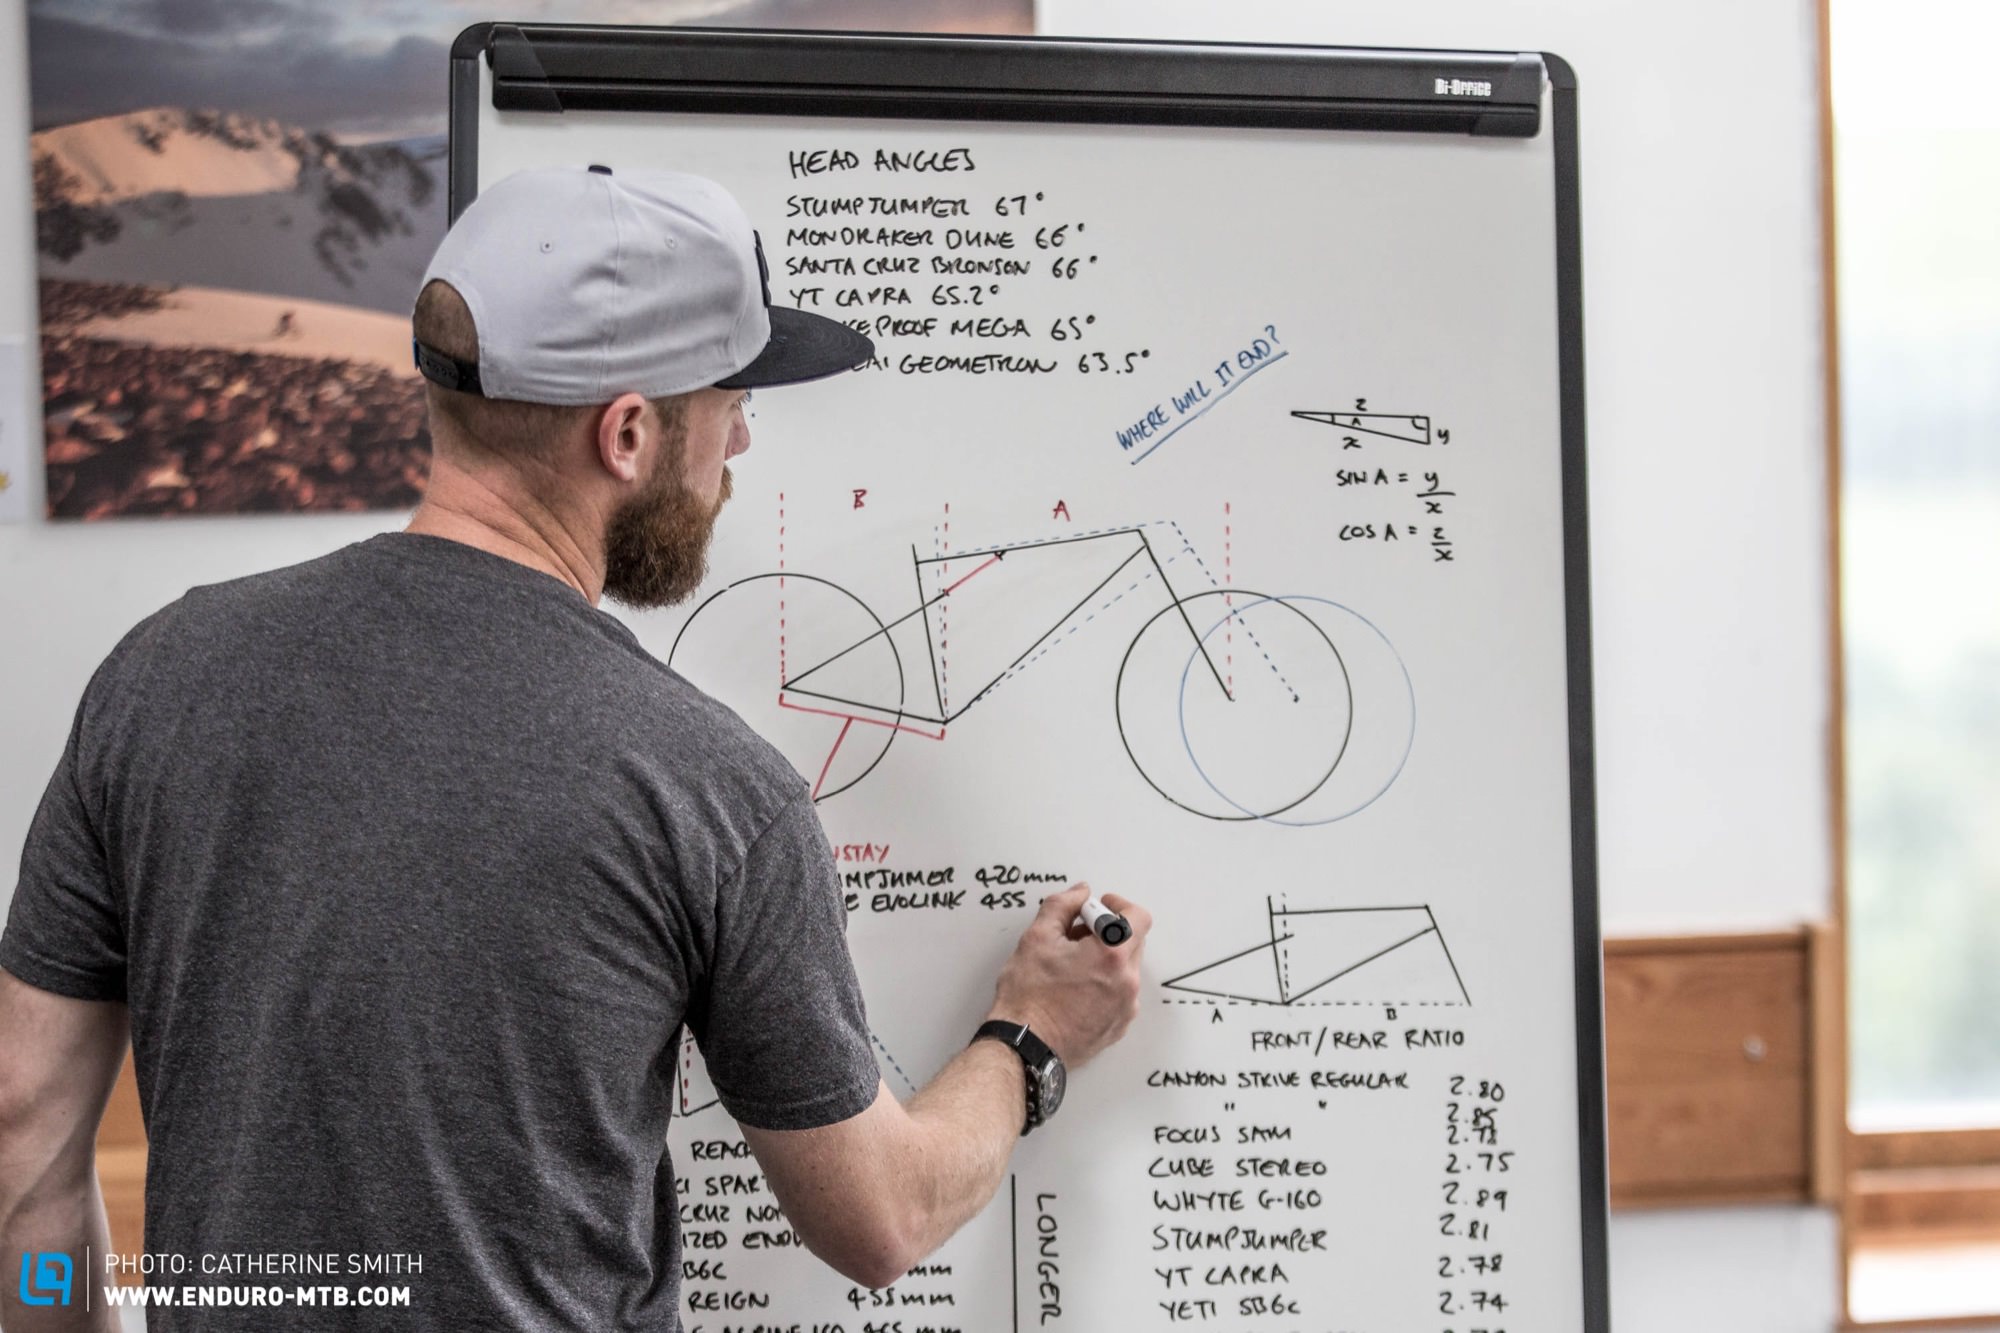 Will a longer and slacker bike make you a better rider?